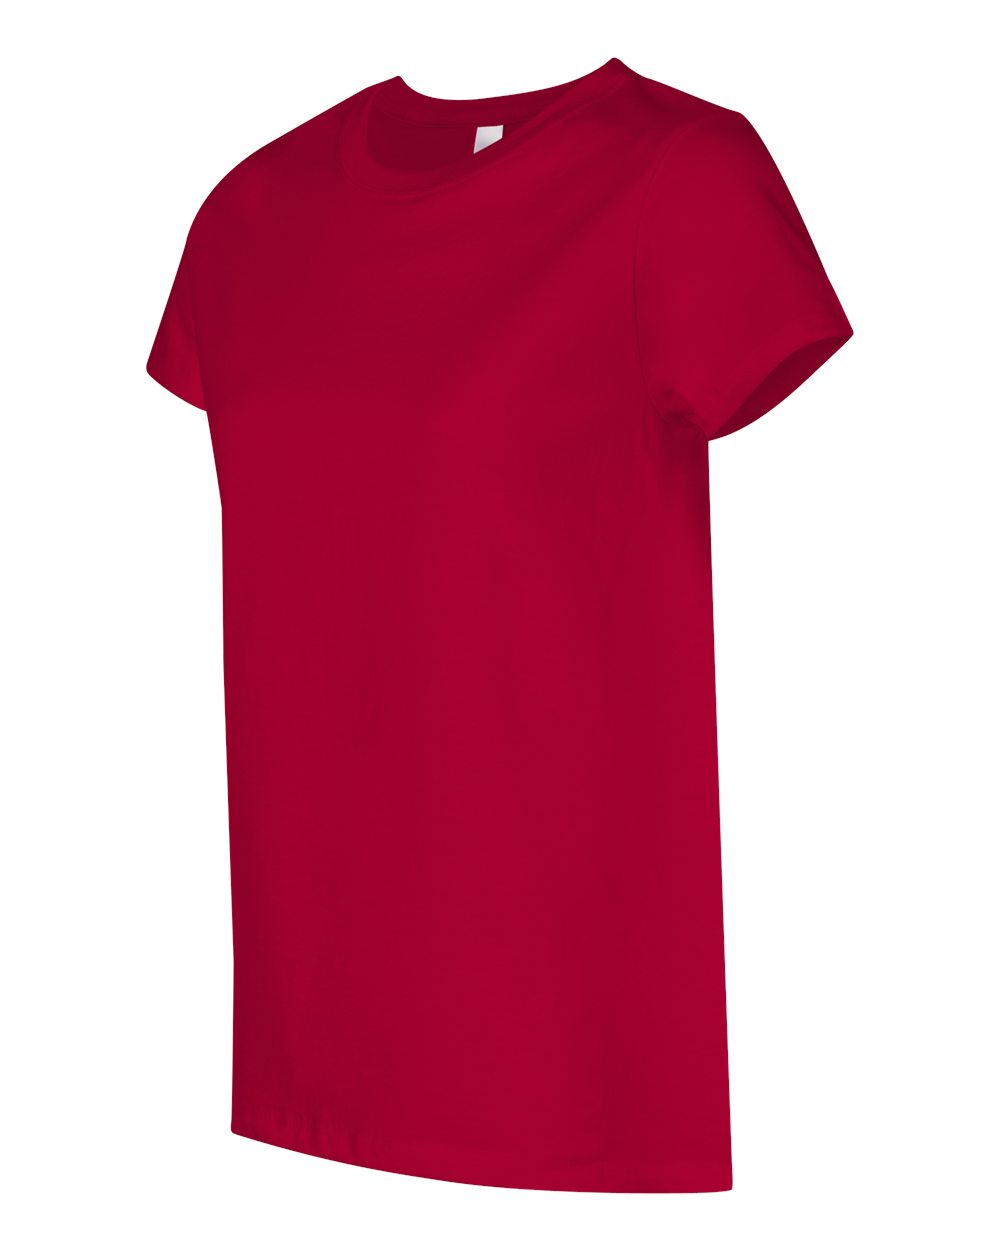 Hanes 5680 - Ladies' ComfortSoft T-Shirt